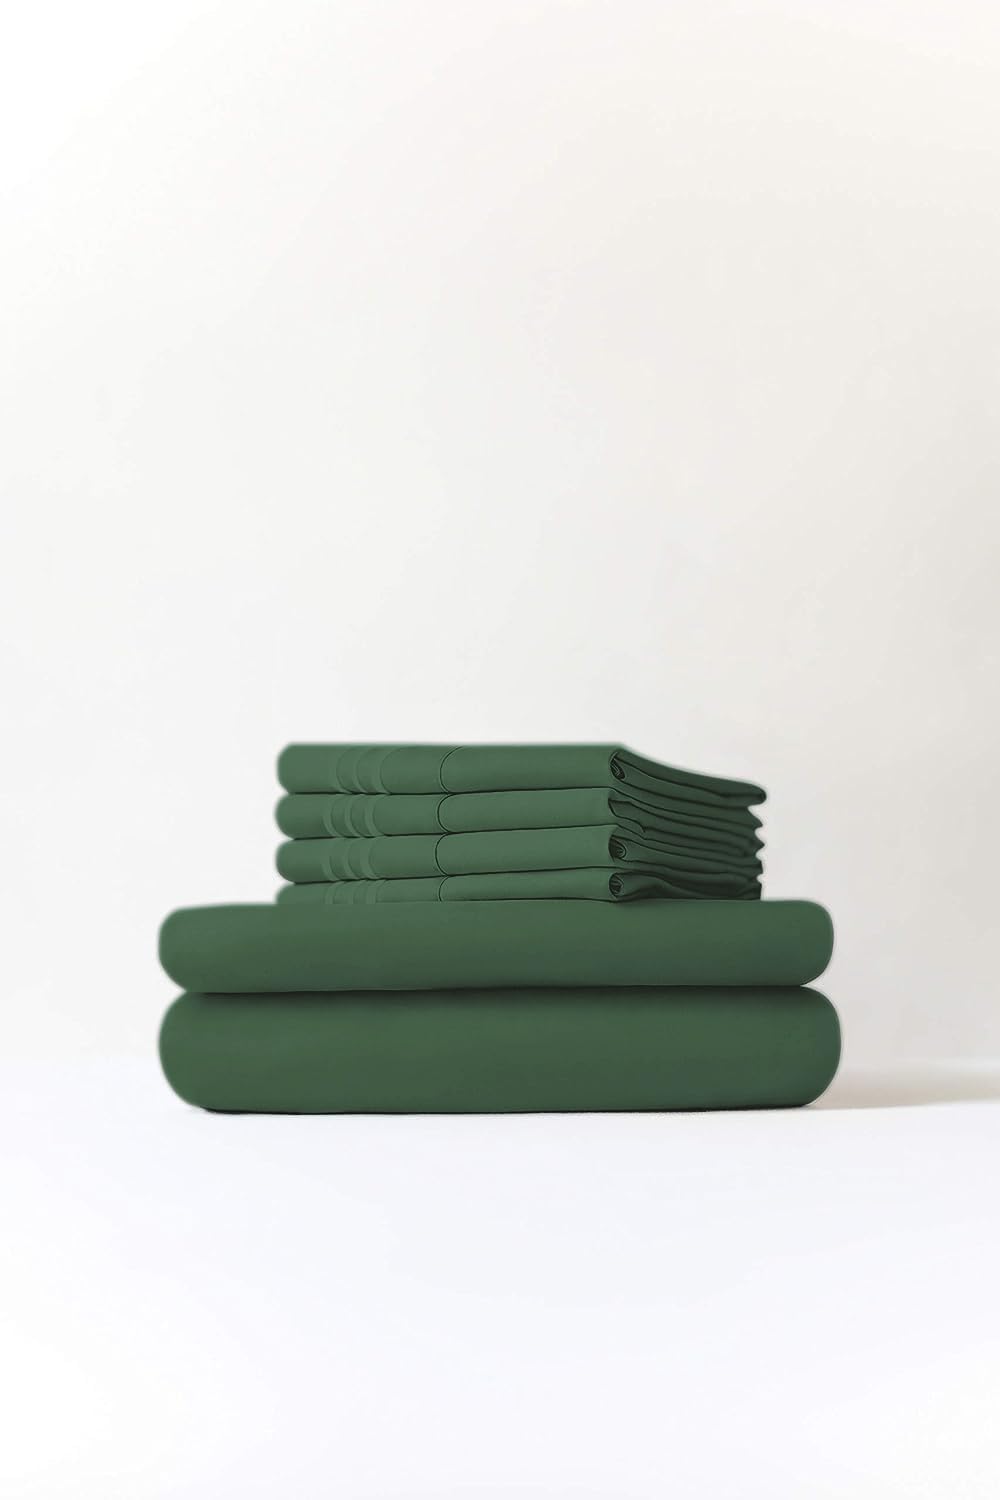 tes 4 Piece Deep Pocket Sheet Set New Colors - Emerald Green